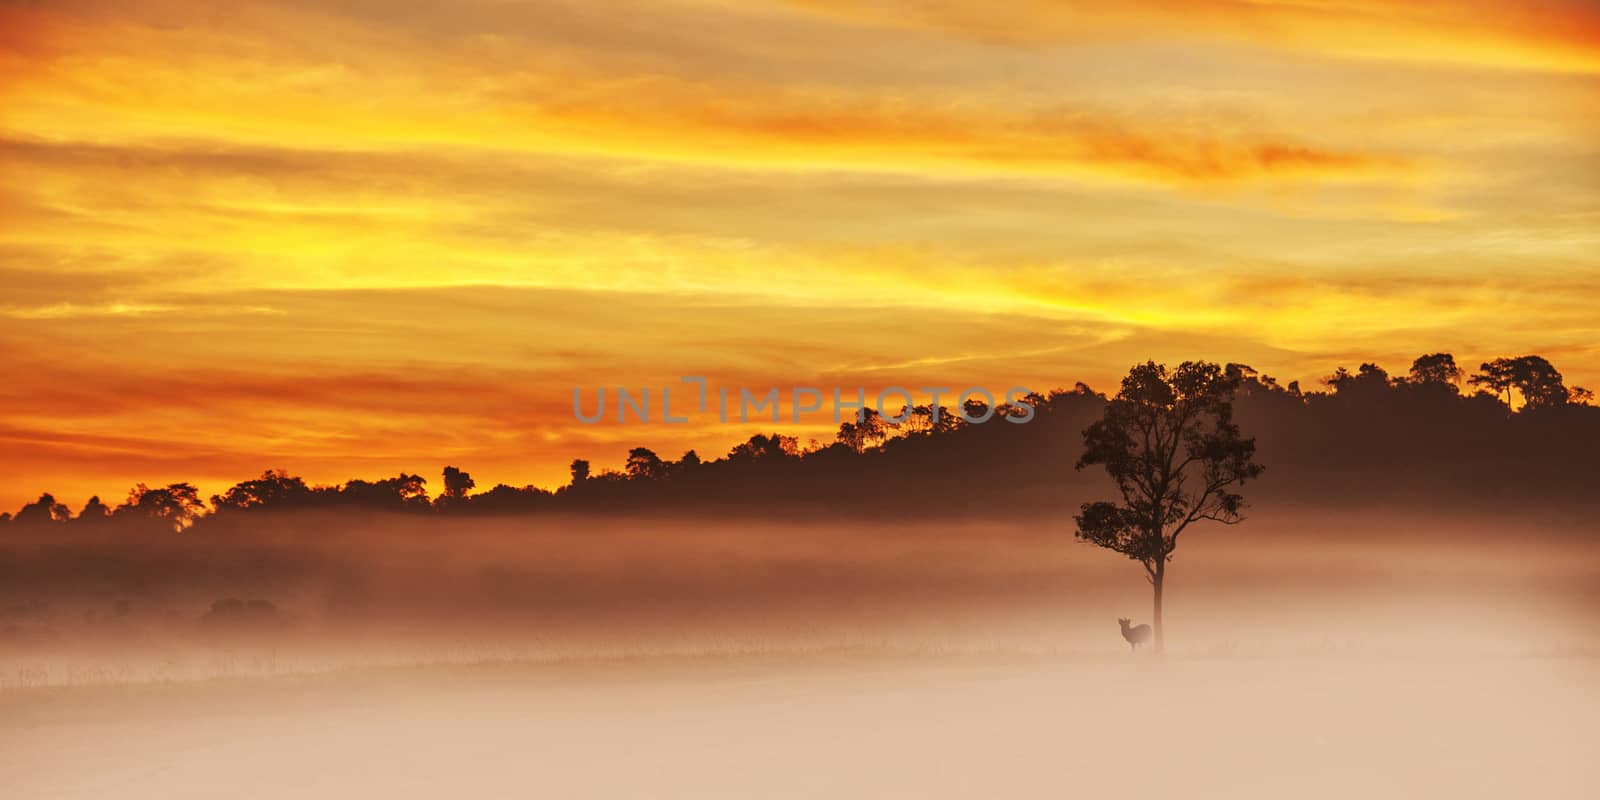 Alone dear in tree at golden sunset by Surasak